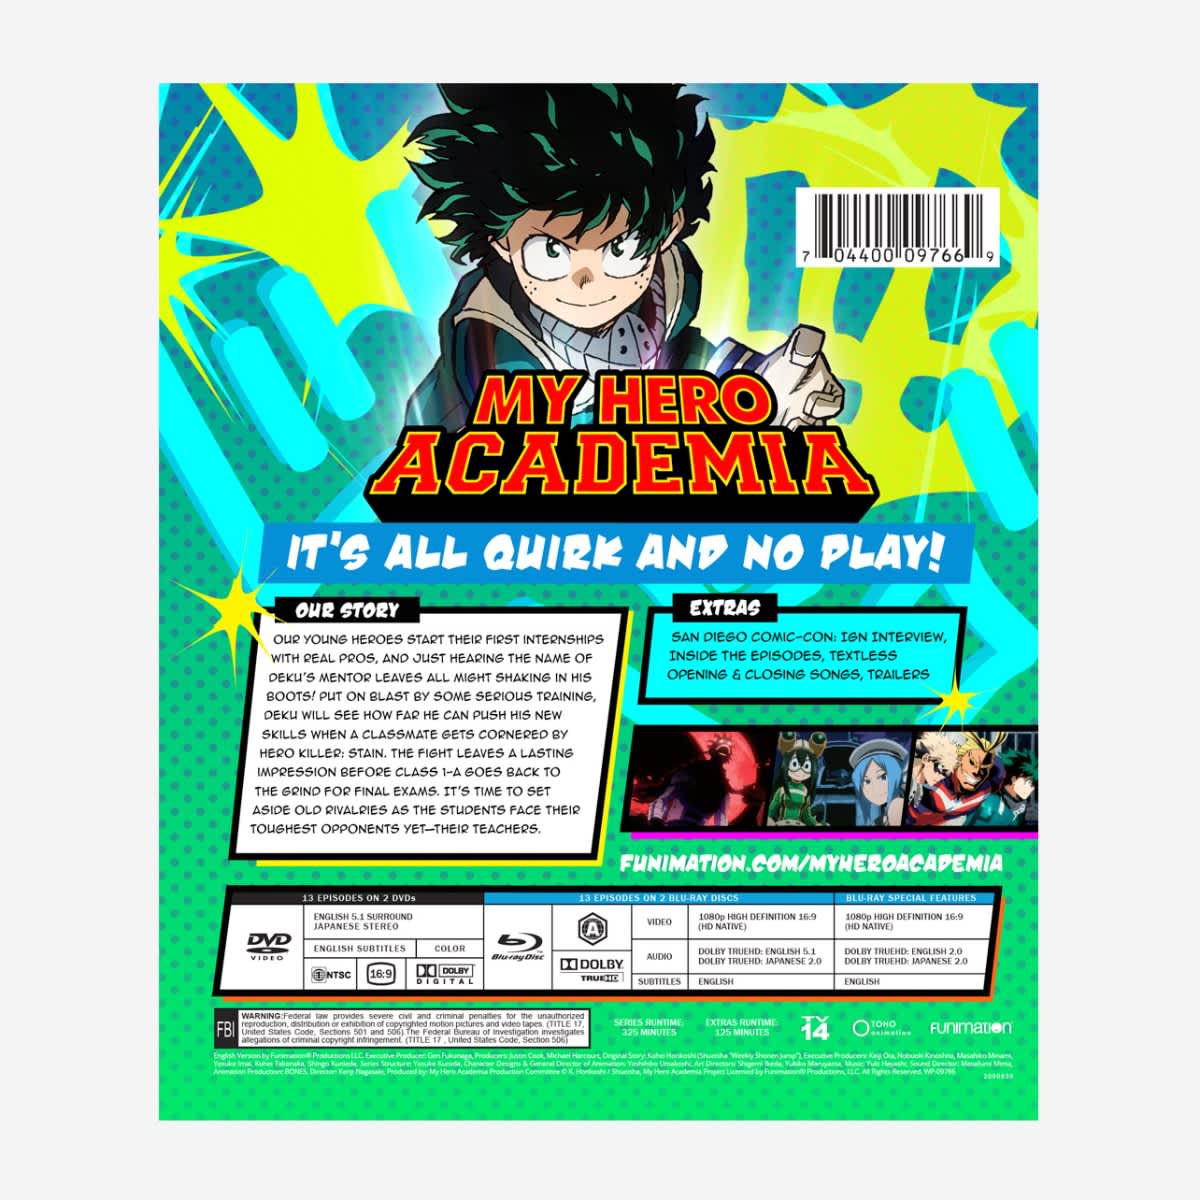 My Hero Academia: Season 5 Part 2 (MY VILLAIN ACADEMIA) (Blu-ray BOX SET)  ANIME 704400106538